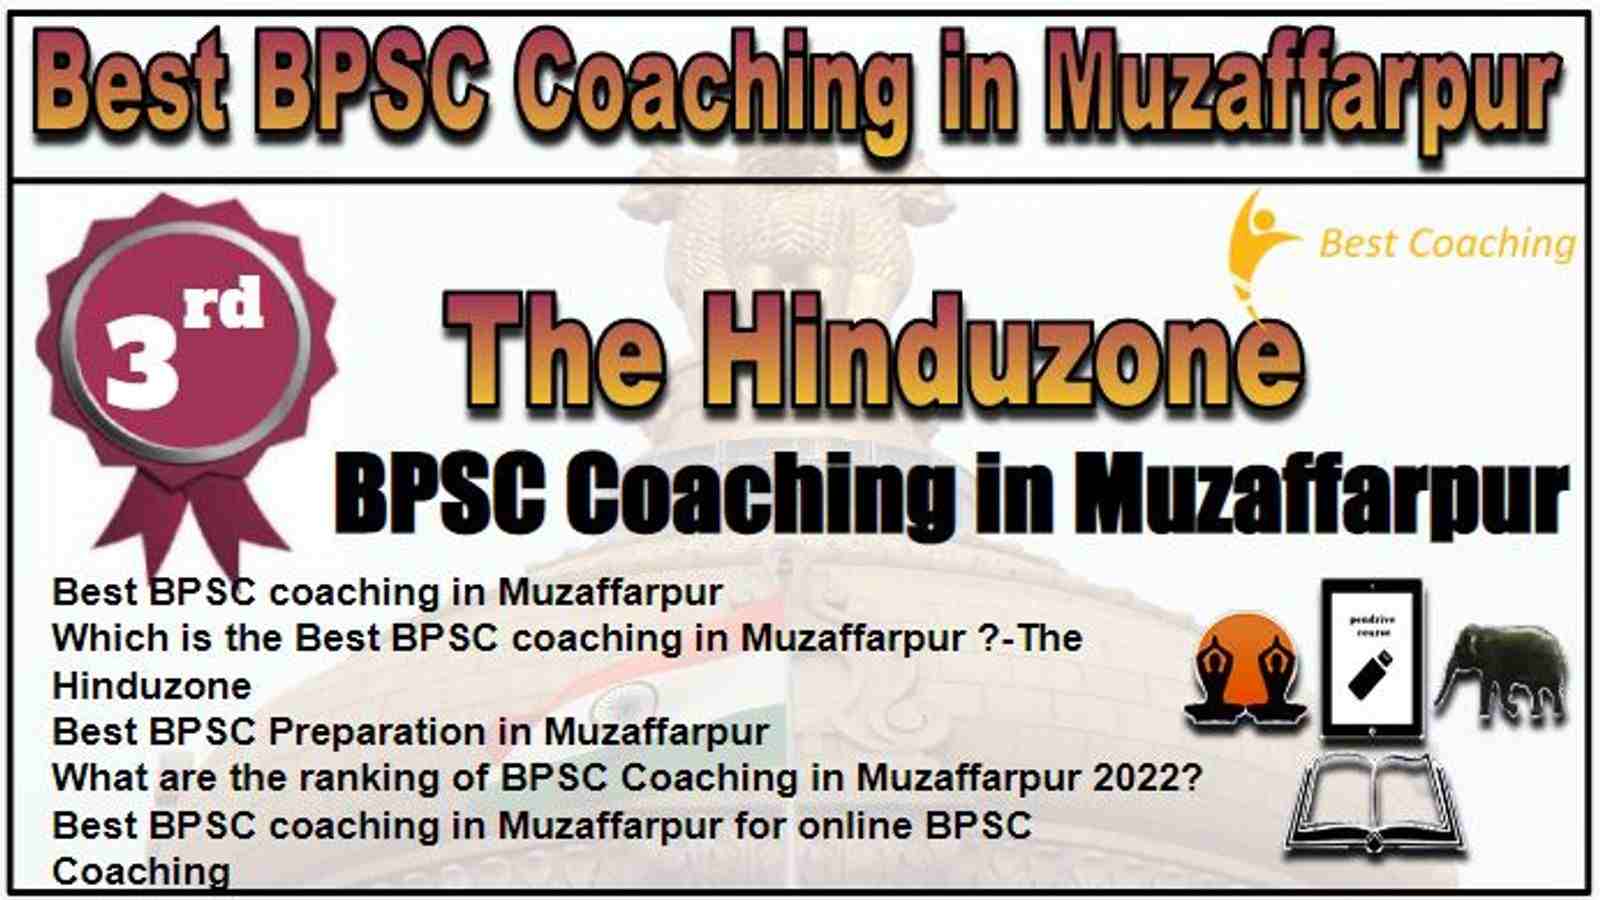 Rank 3 Best BPSC Coaching in Muzaffarpur